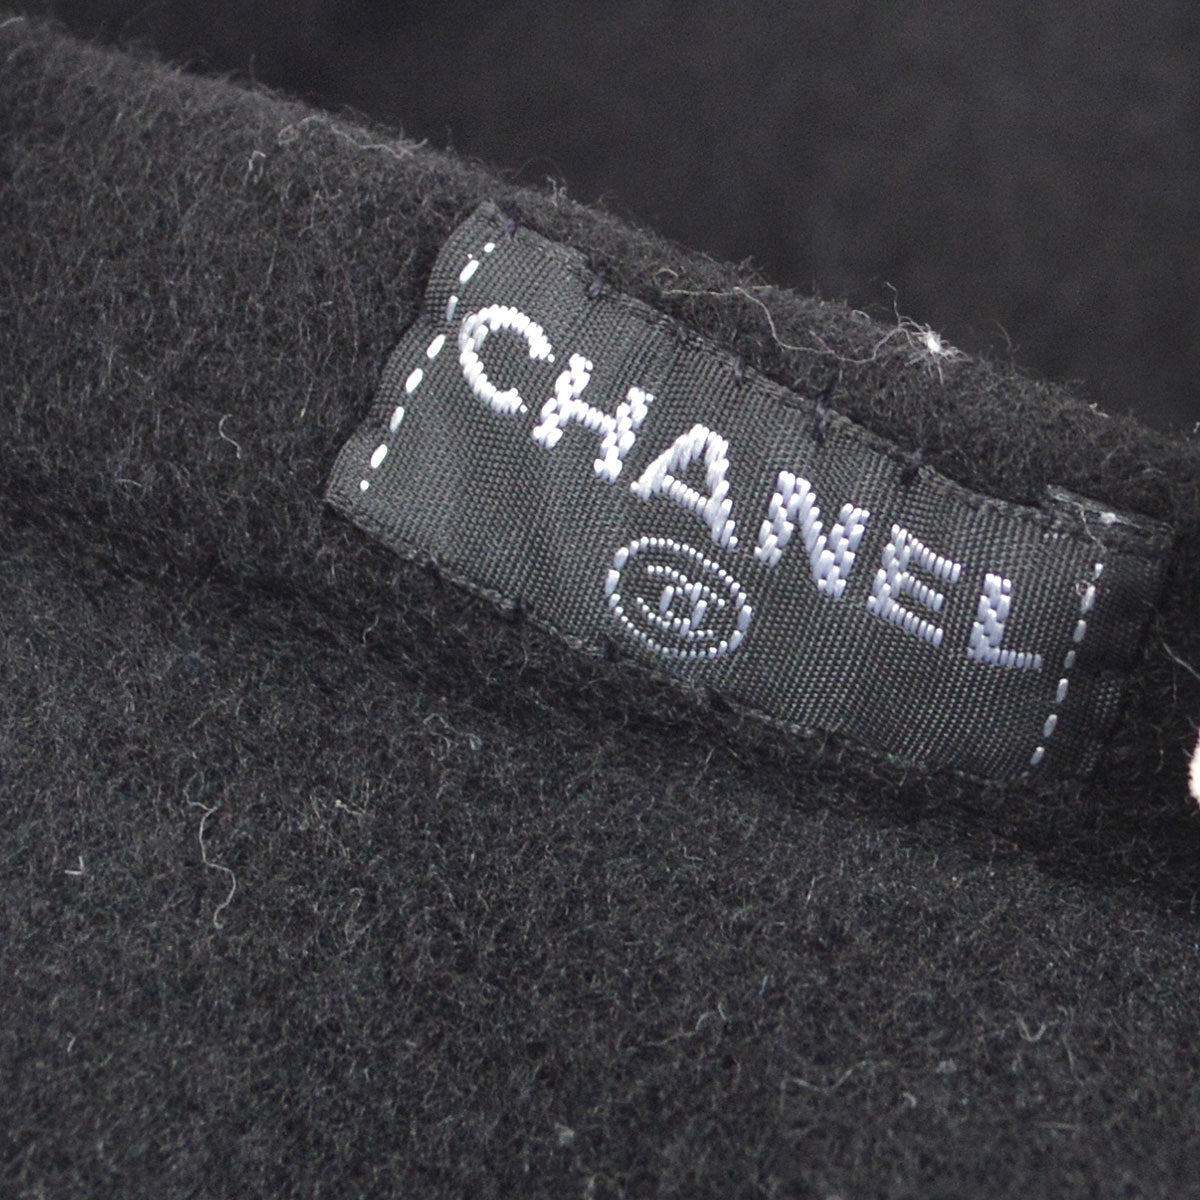 Chanel 1998 spring wool beret hat 